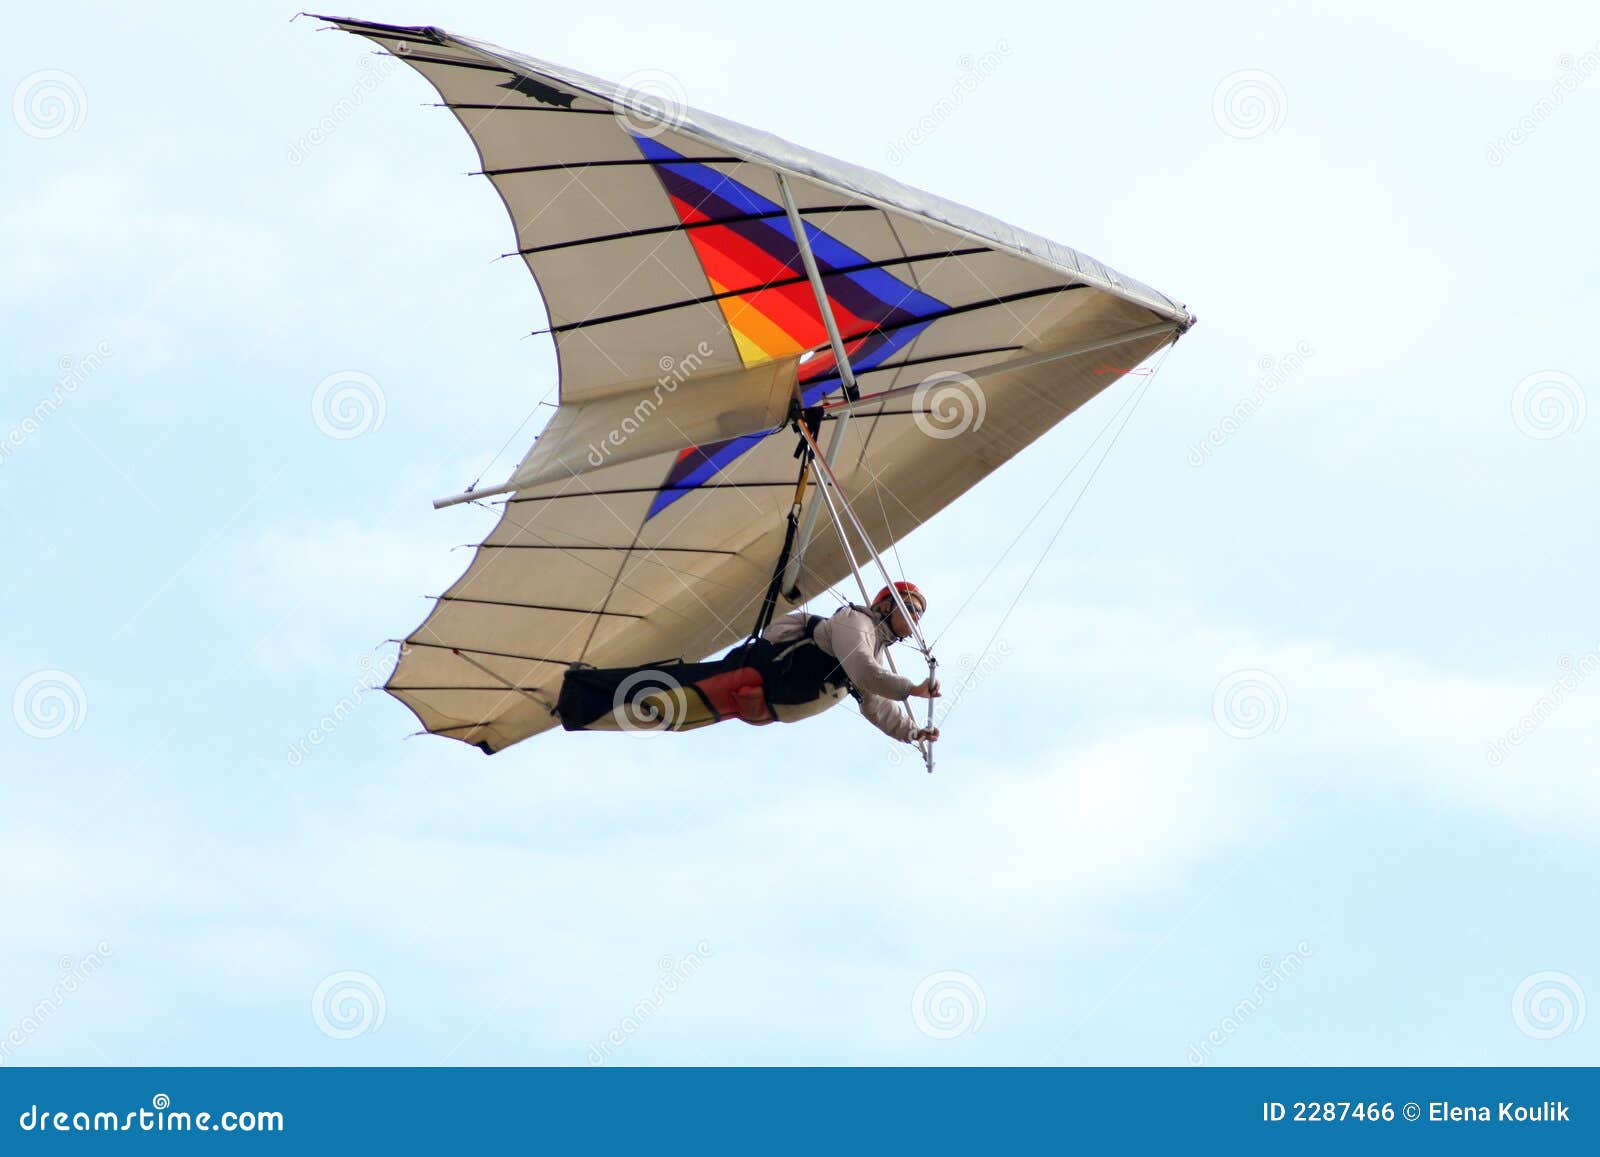 hang-glider